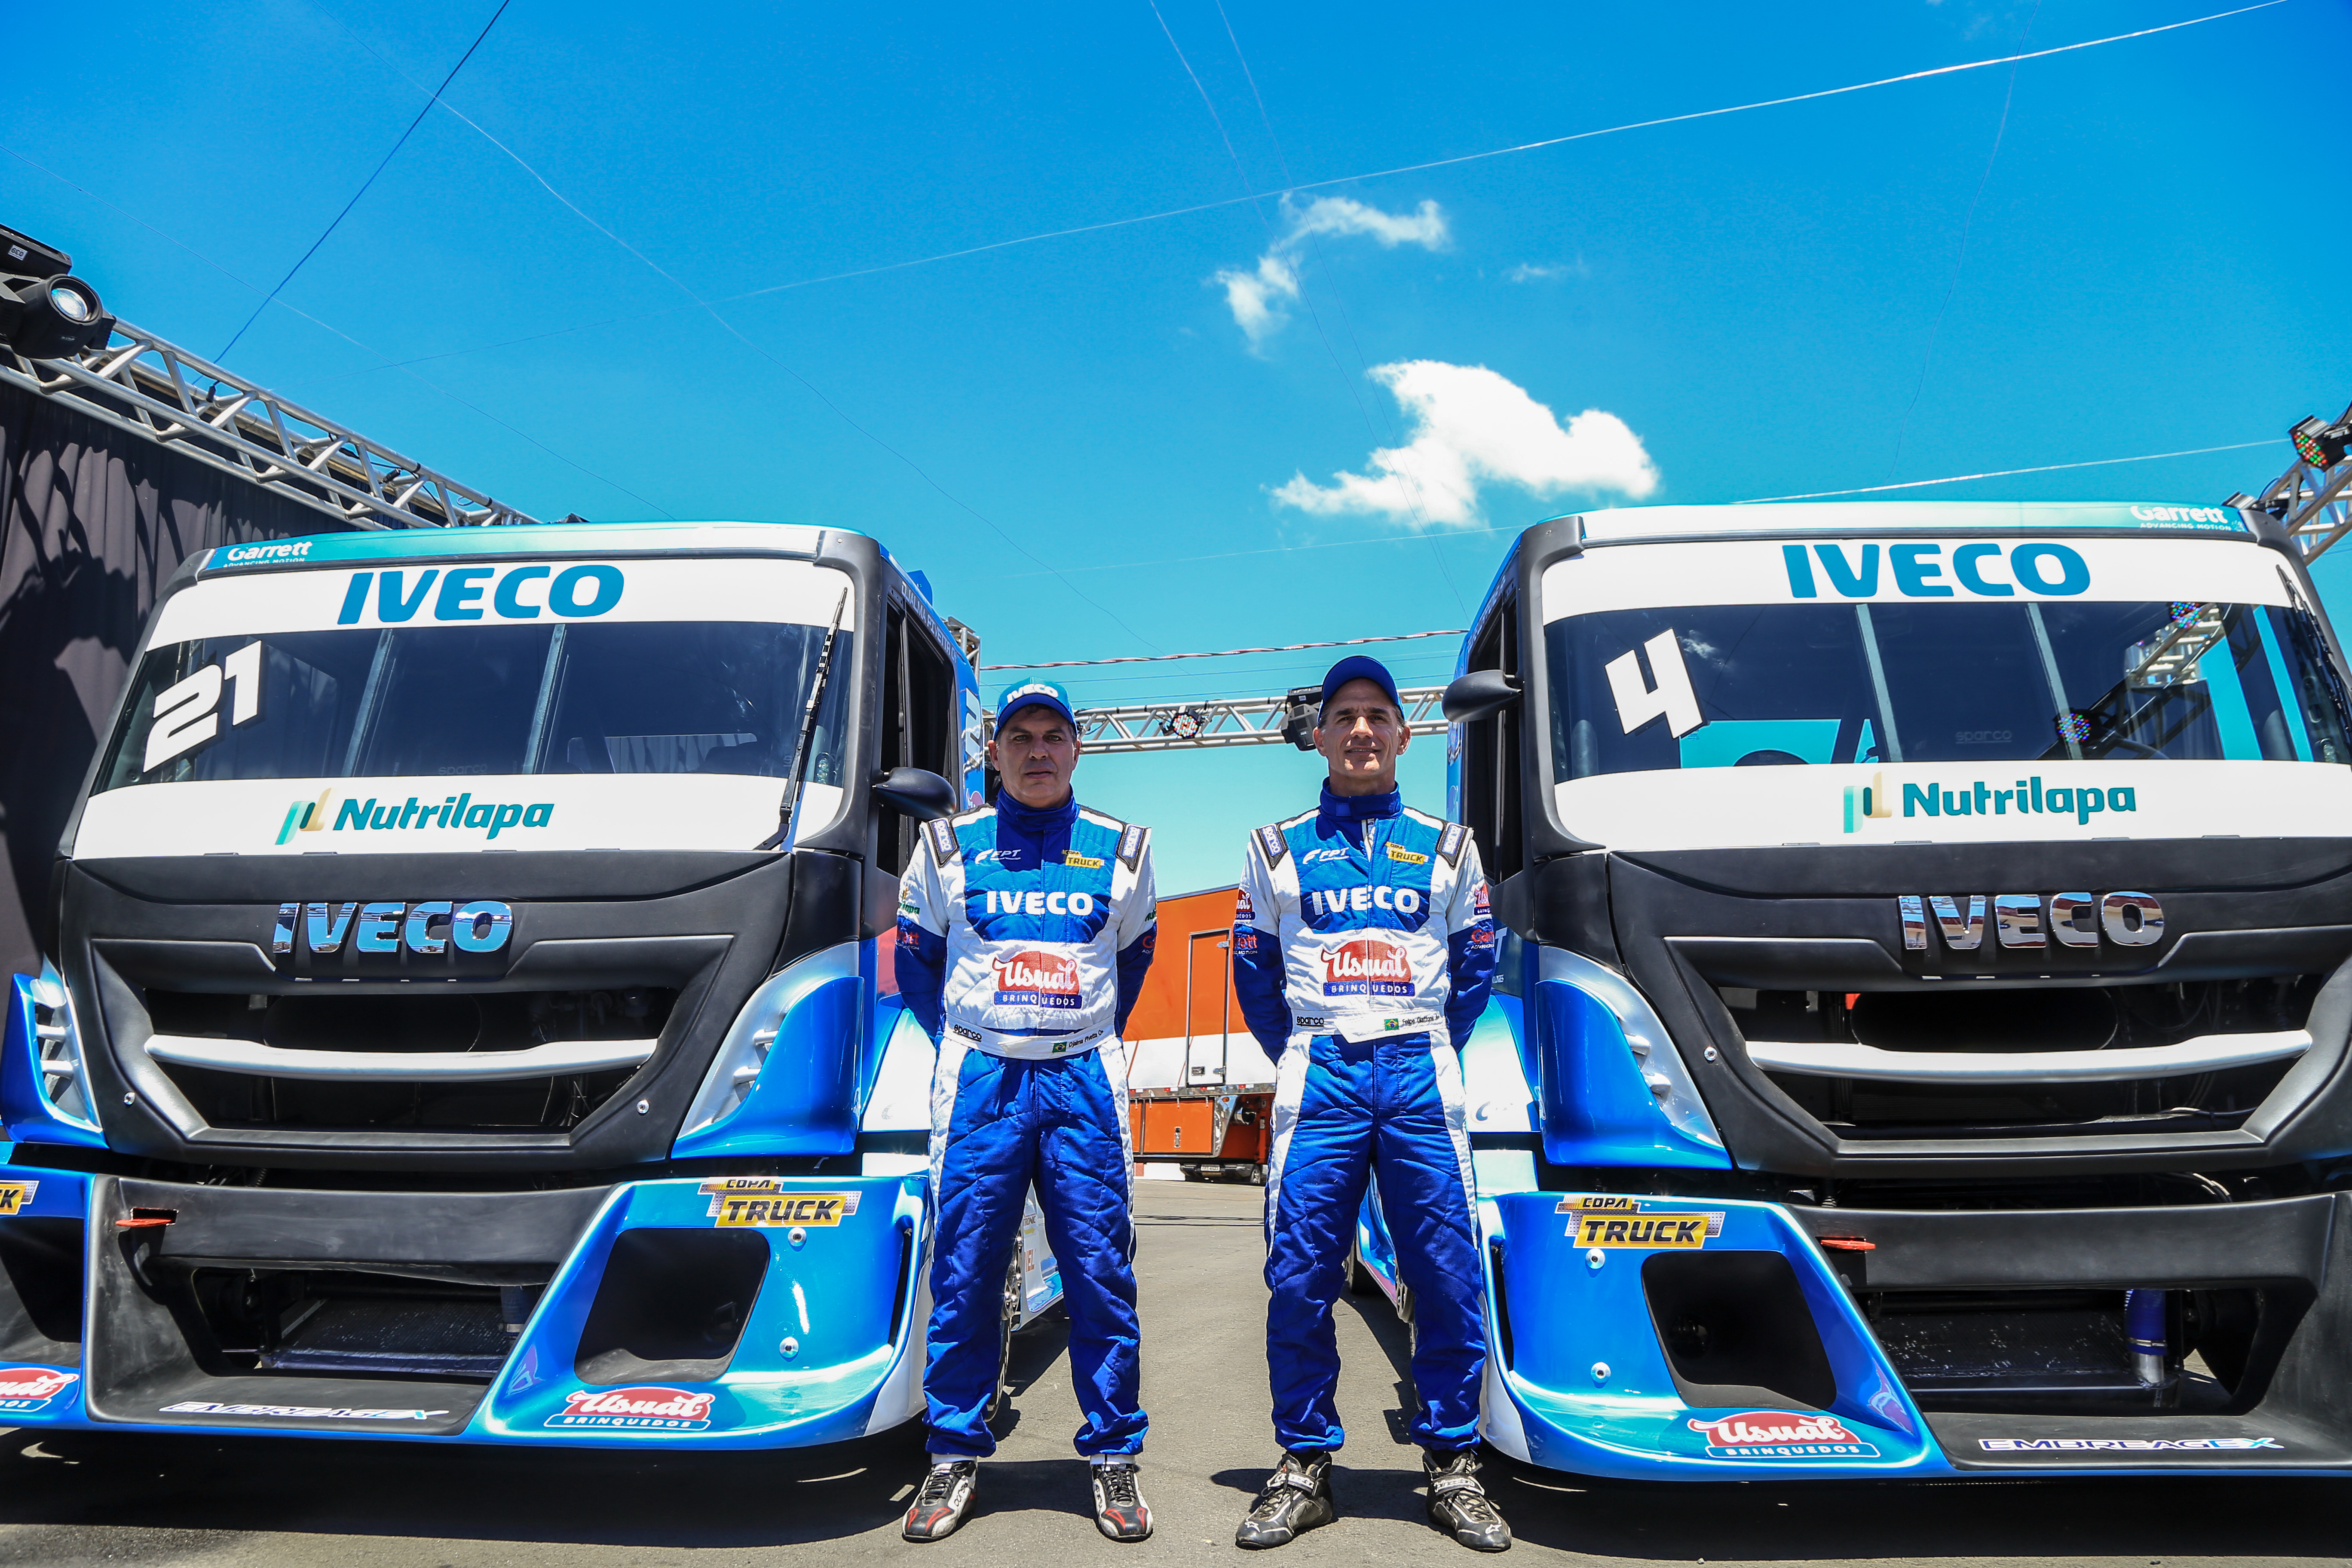 Nova equipe da Copa Truck, Usual Racing mescla sonhos e responsabilidades